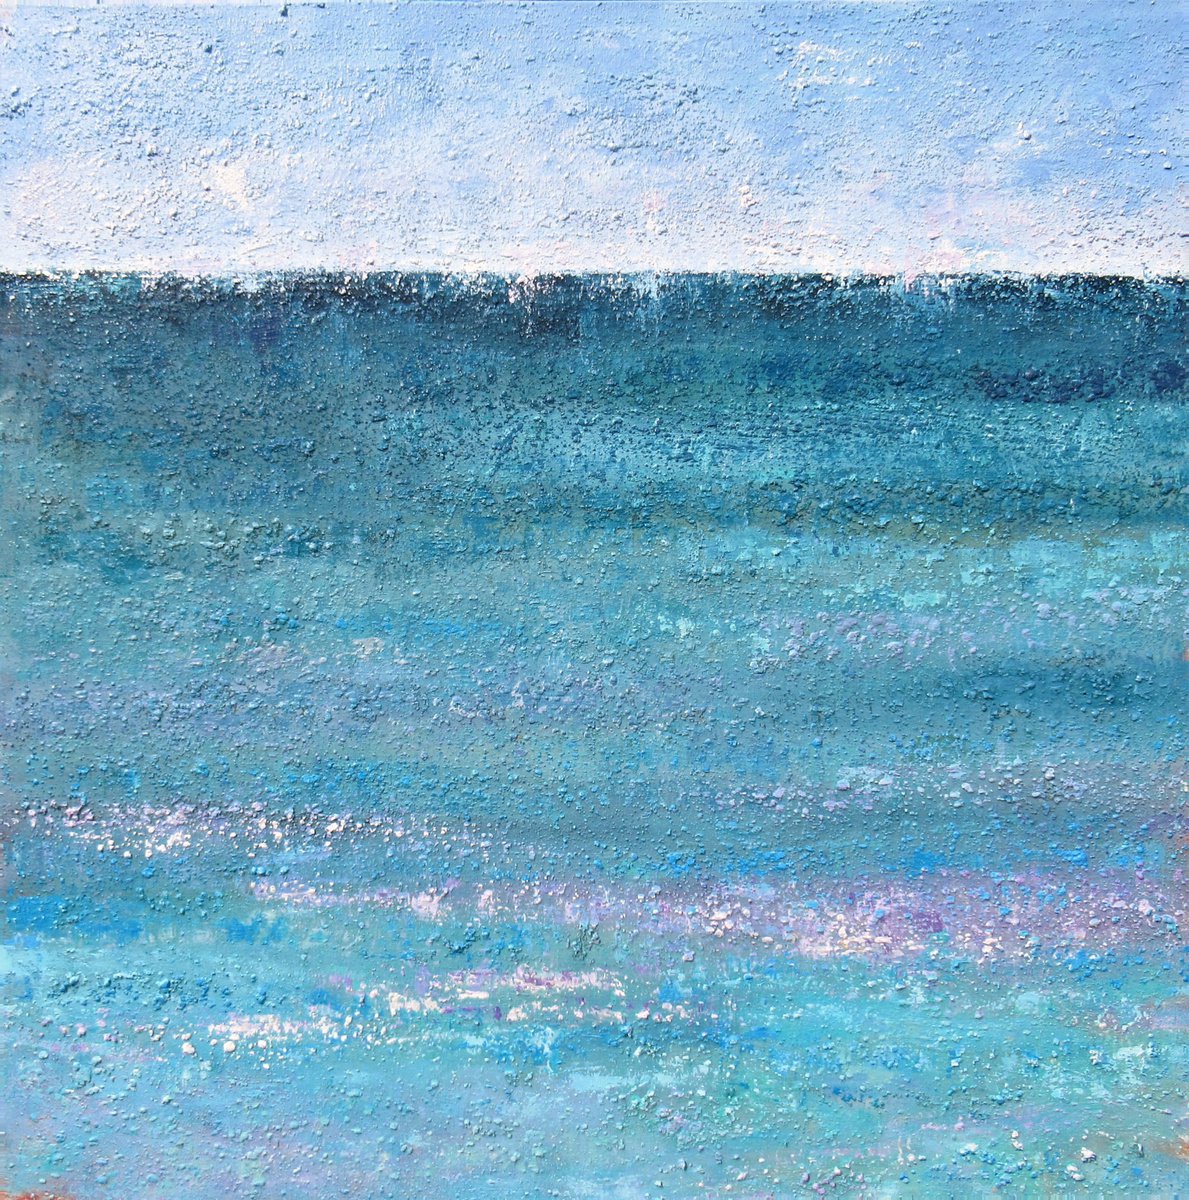 The Boundless Sea by Sherry Edmondson